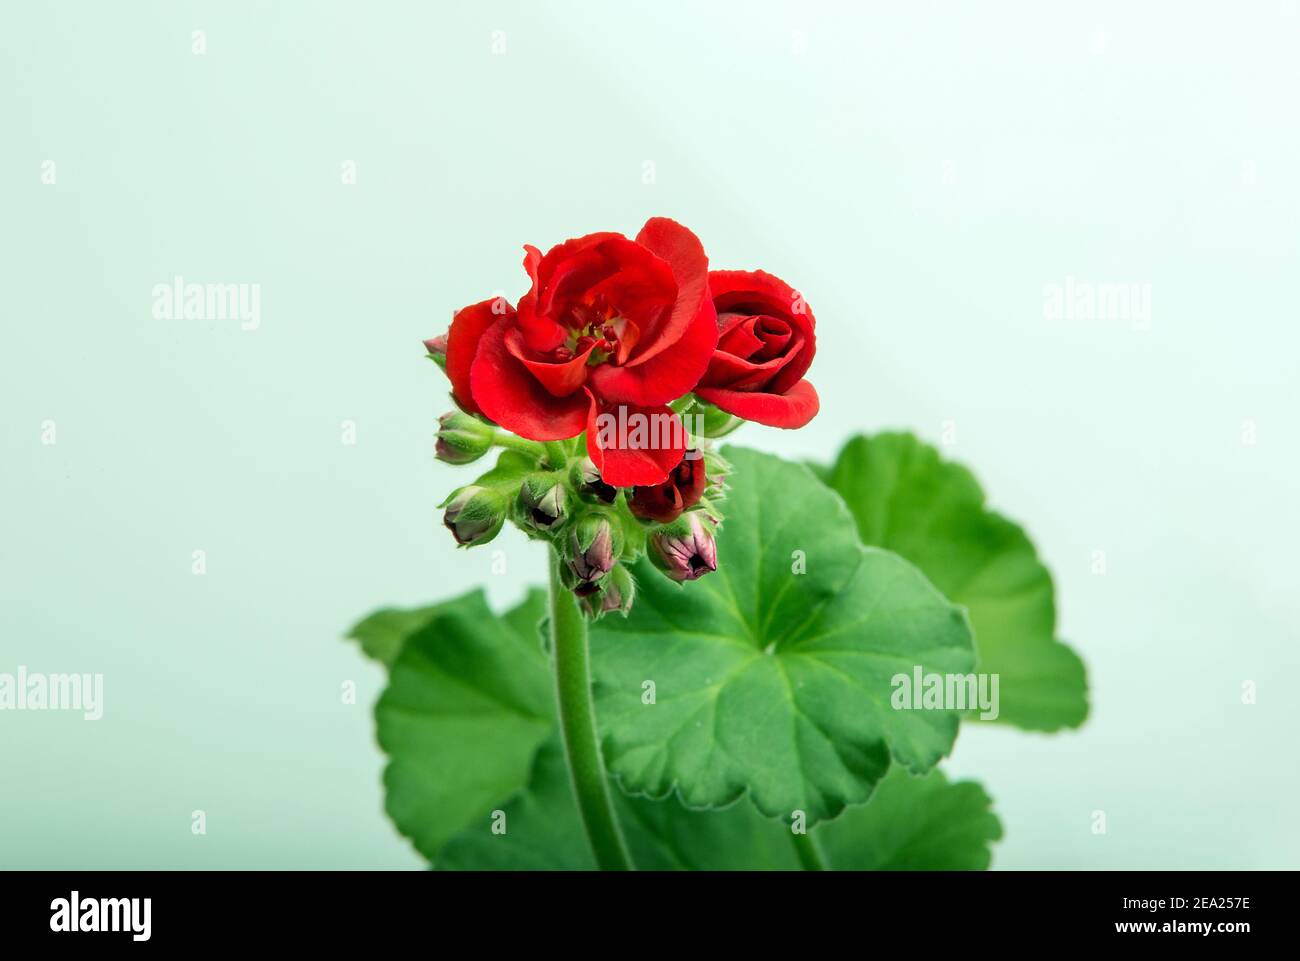 image of indoor flower geranium pelargonium bloomed with red flowers Stock Photo